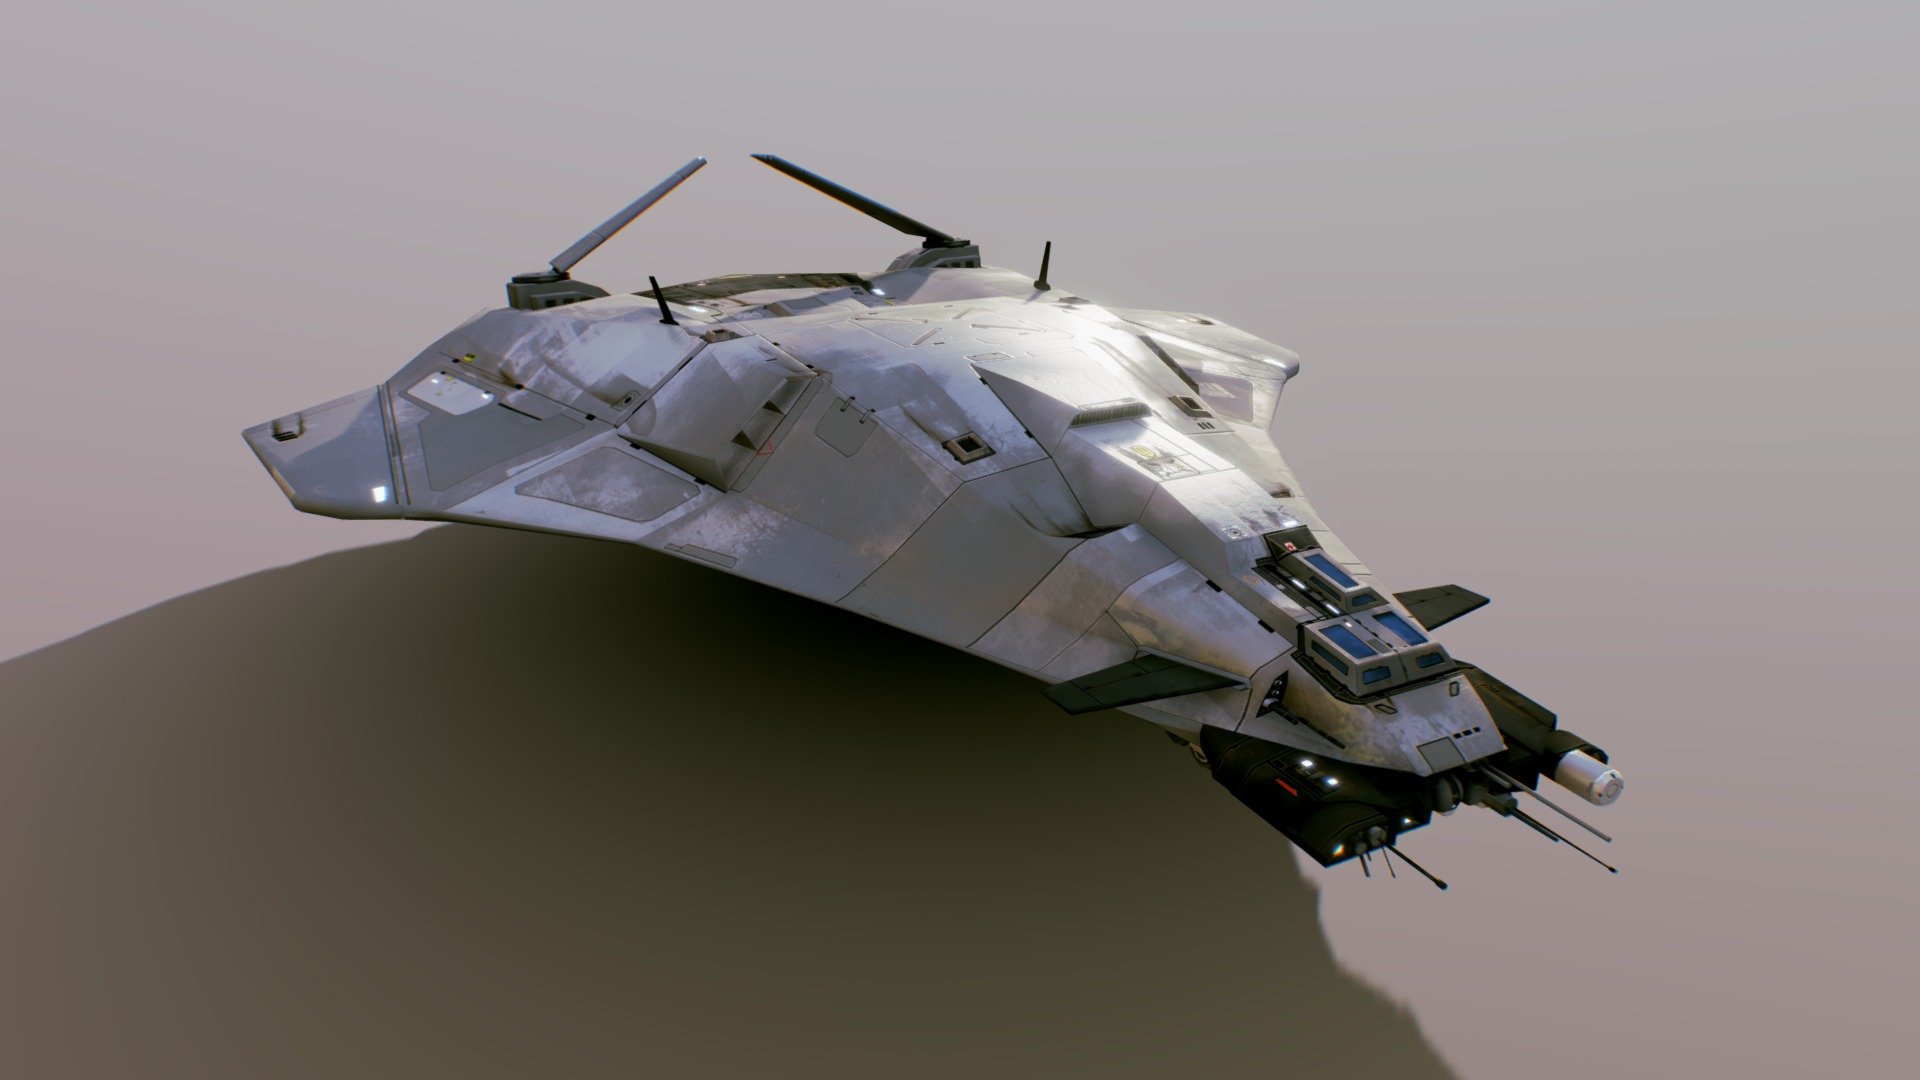 Deserts of Kharak 8k retexturing project. Updates soon - Coalition bomber - 3D model by ztrztr (@ztrztr3) 3d model